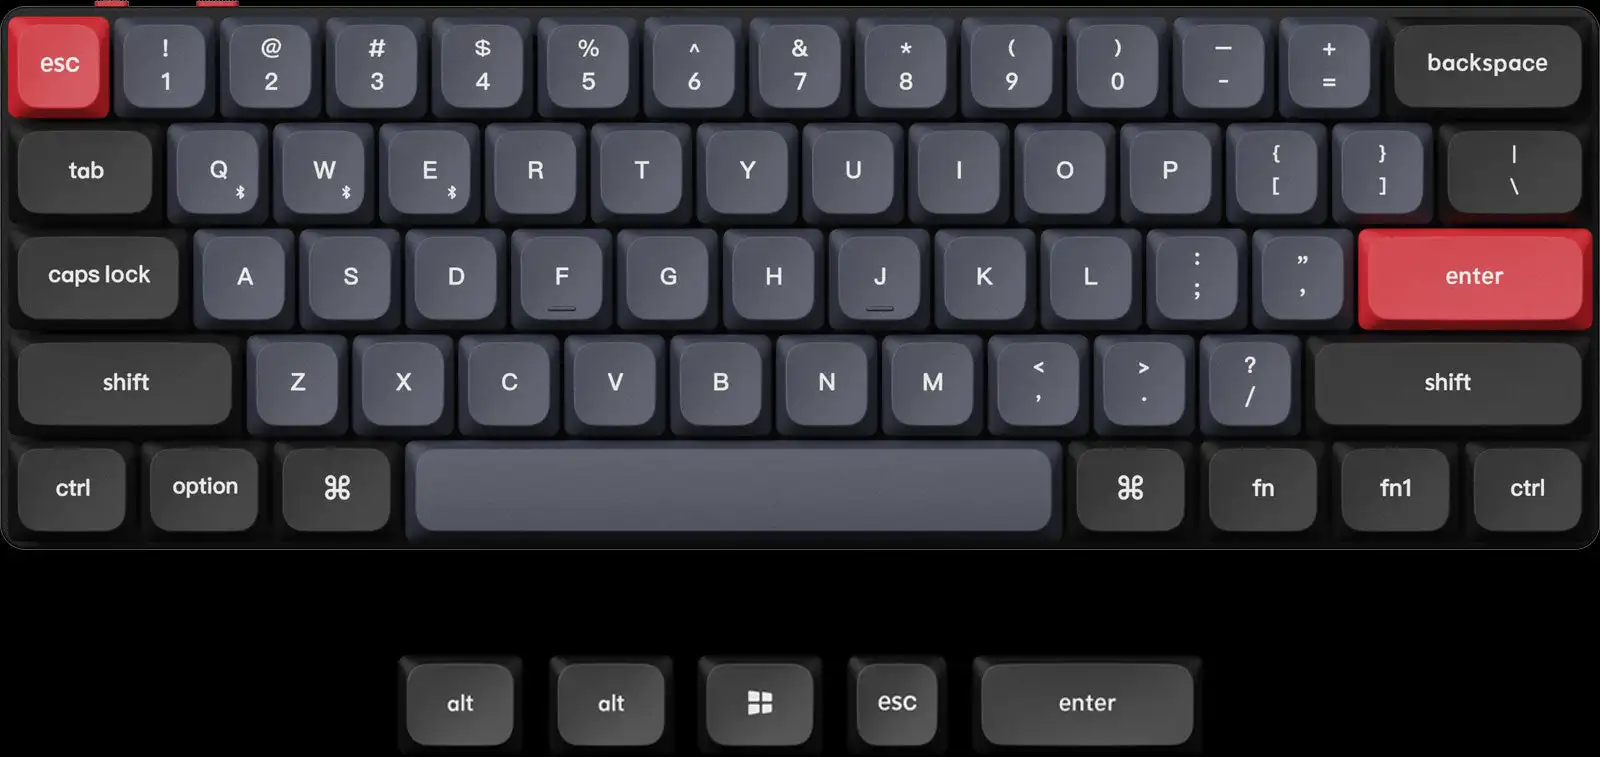 Keychron K9 Pro H Custom Mechanical Keyboard 60% Layout QMK/VIA Programmable